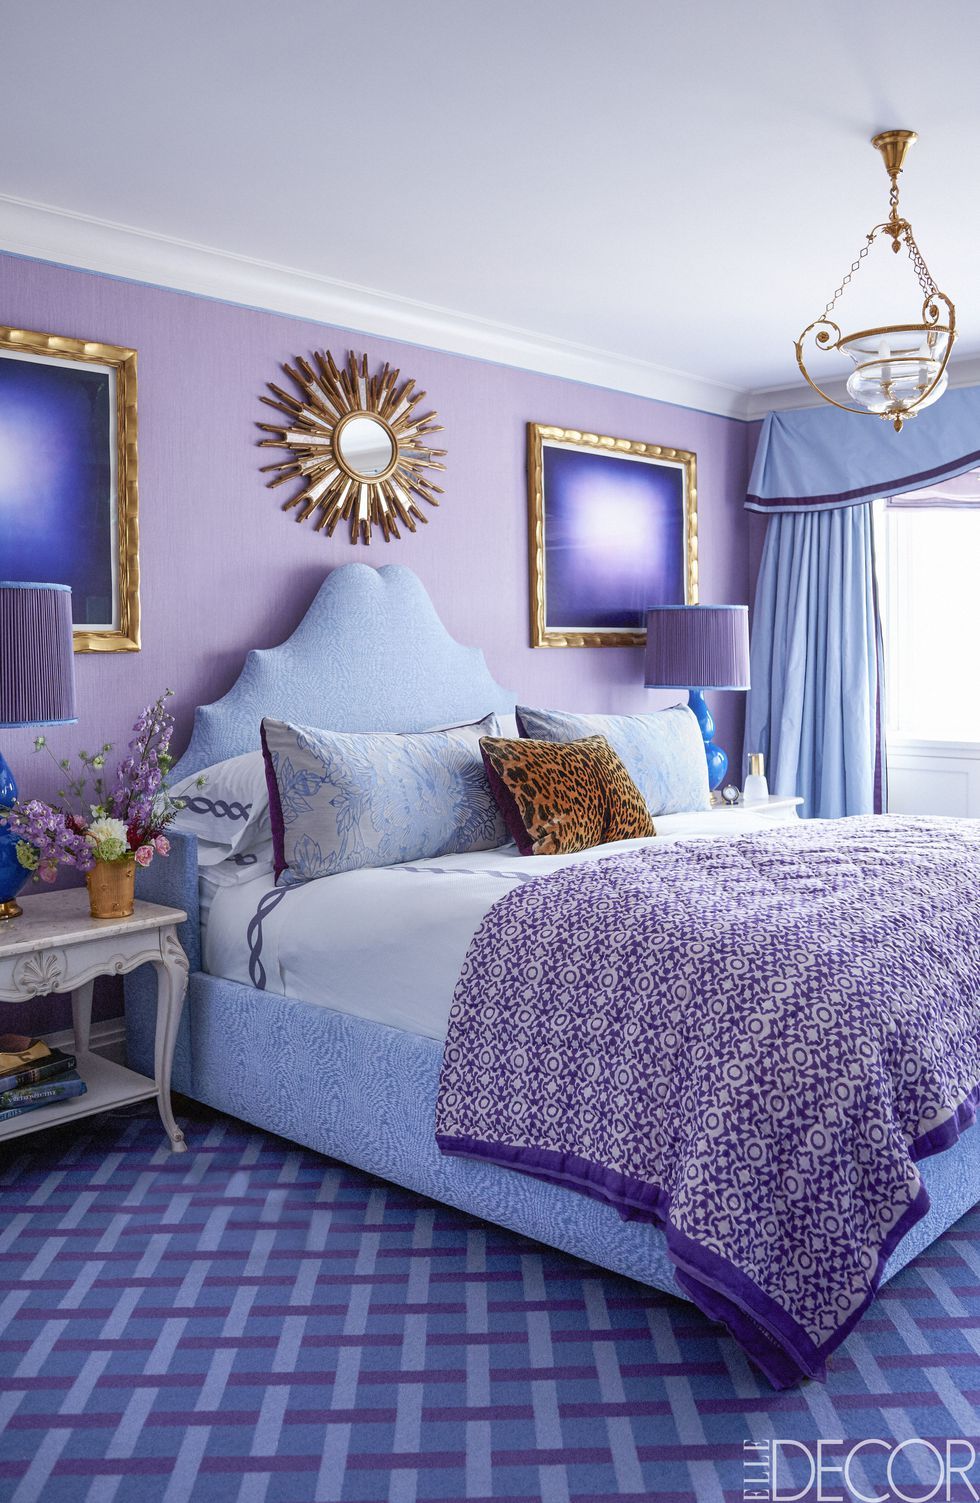 10 Stylish Purple Bedrooms - Ideas for Bedroom Decor in Purple